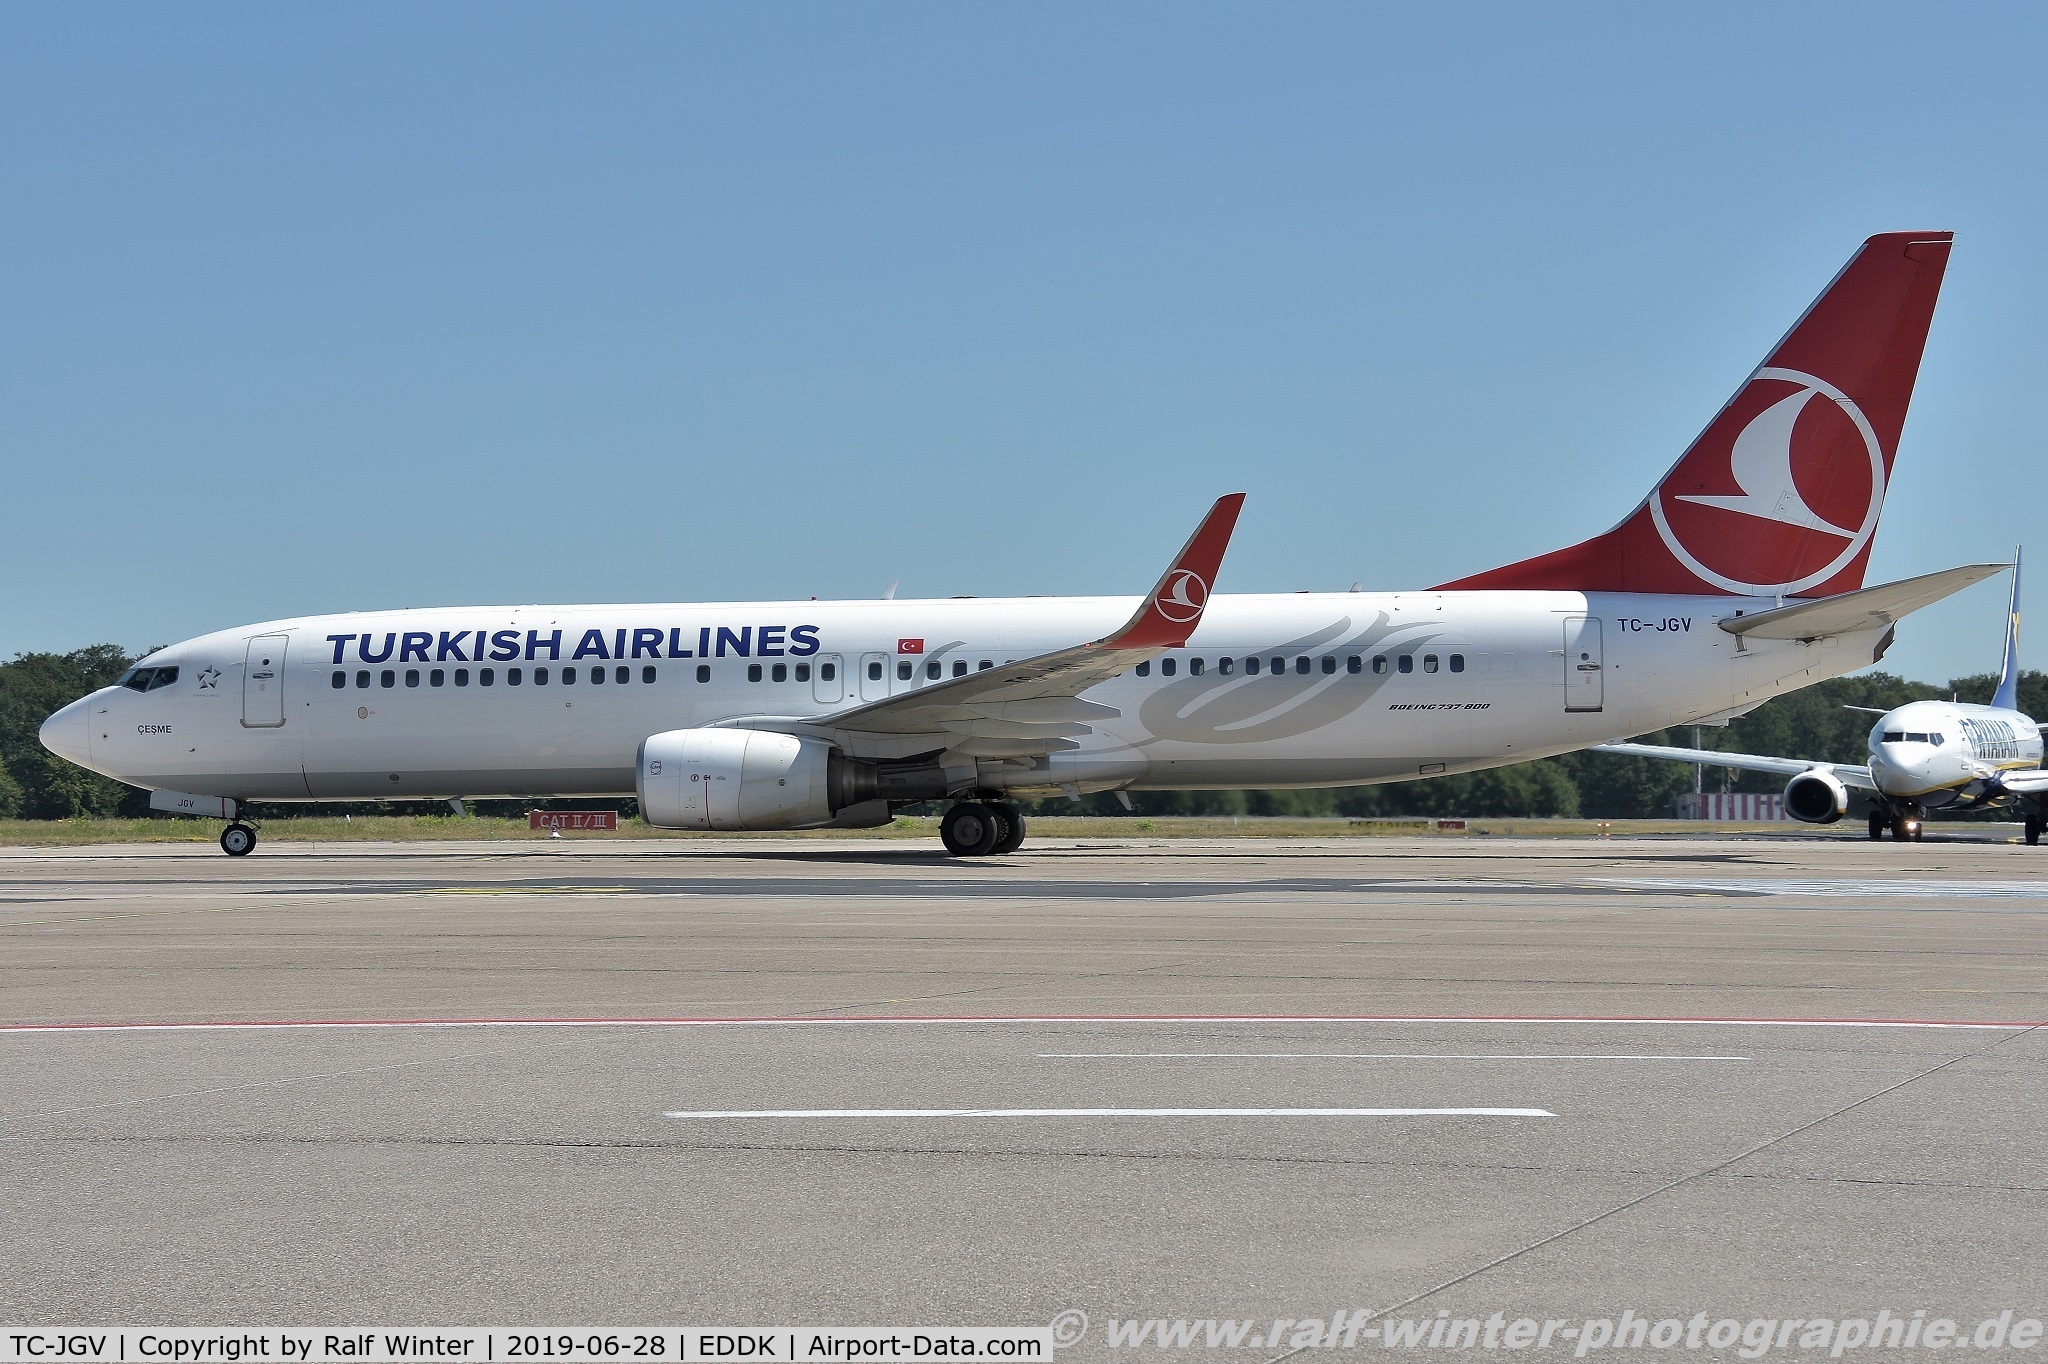 TC-JGV, 2006 Boeing 737-8F2 C/N 34419, Boeing 737-8F2 - TK THY Turkish Airlines 'Çe?me' - 34419 - TC-JGV - 28.06.2019 - CGN